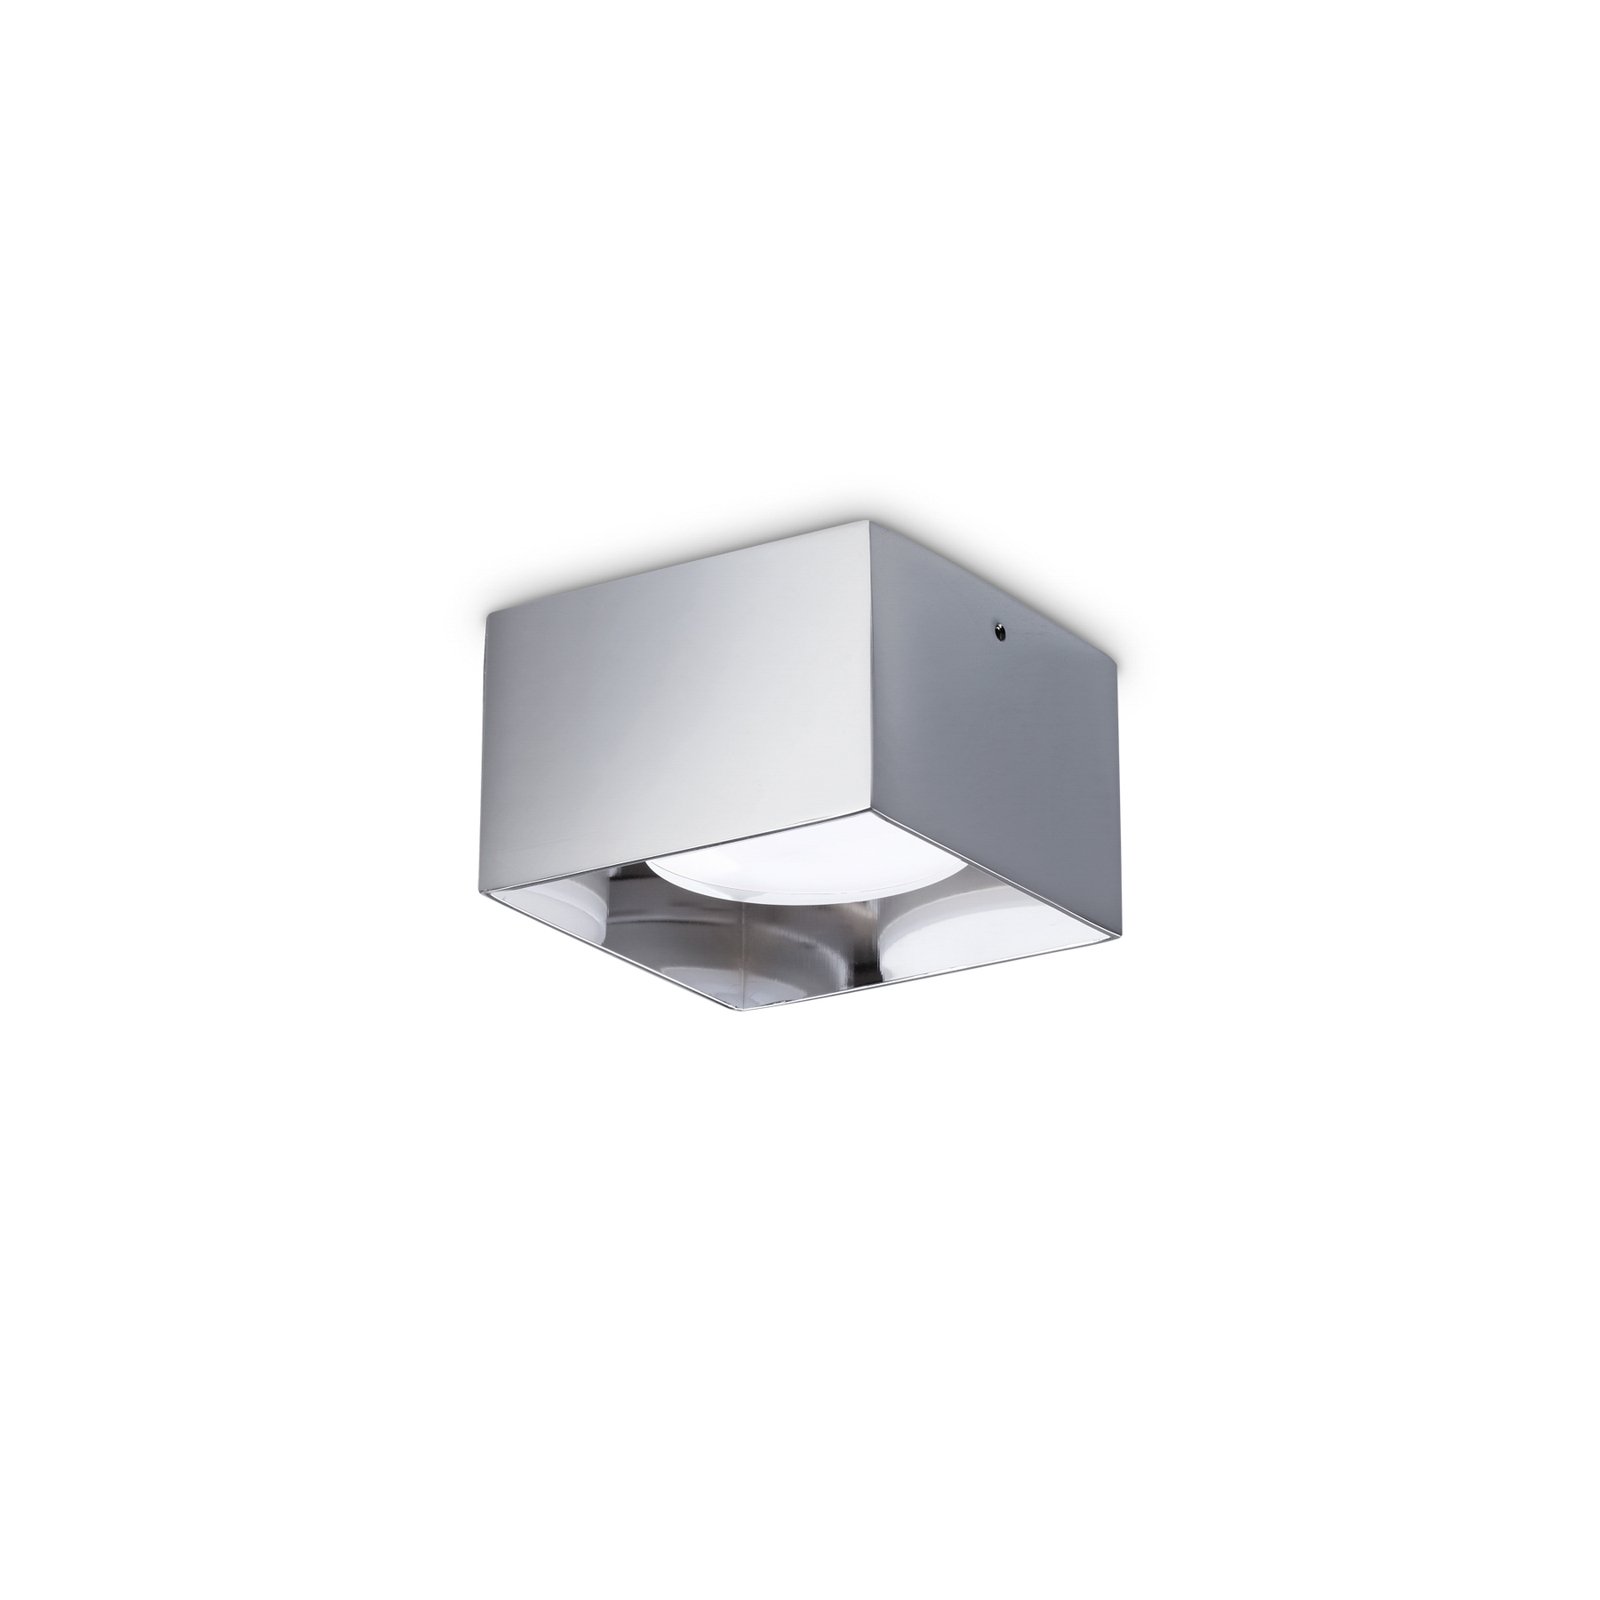 Ideal Lux downlight Spike Square, chrome-coloured, aluminium, 10x10 cm